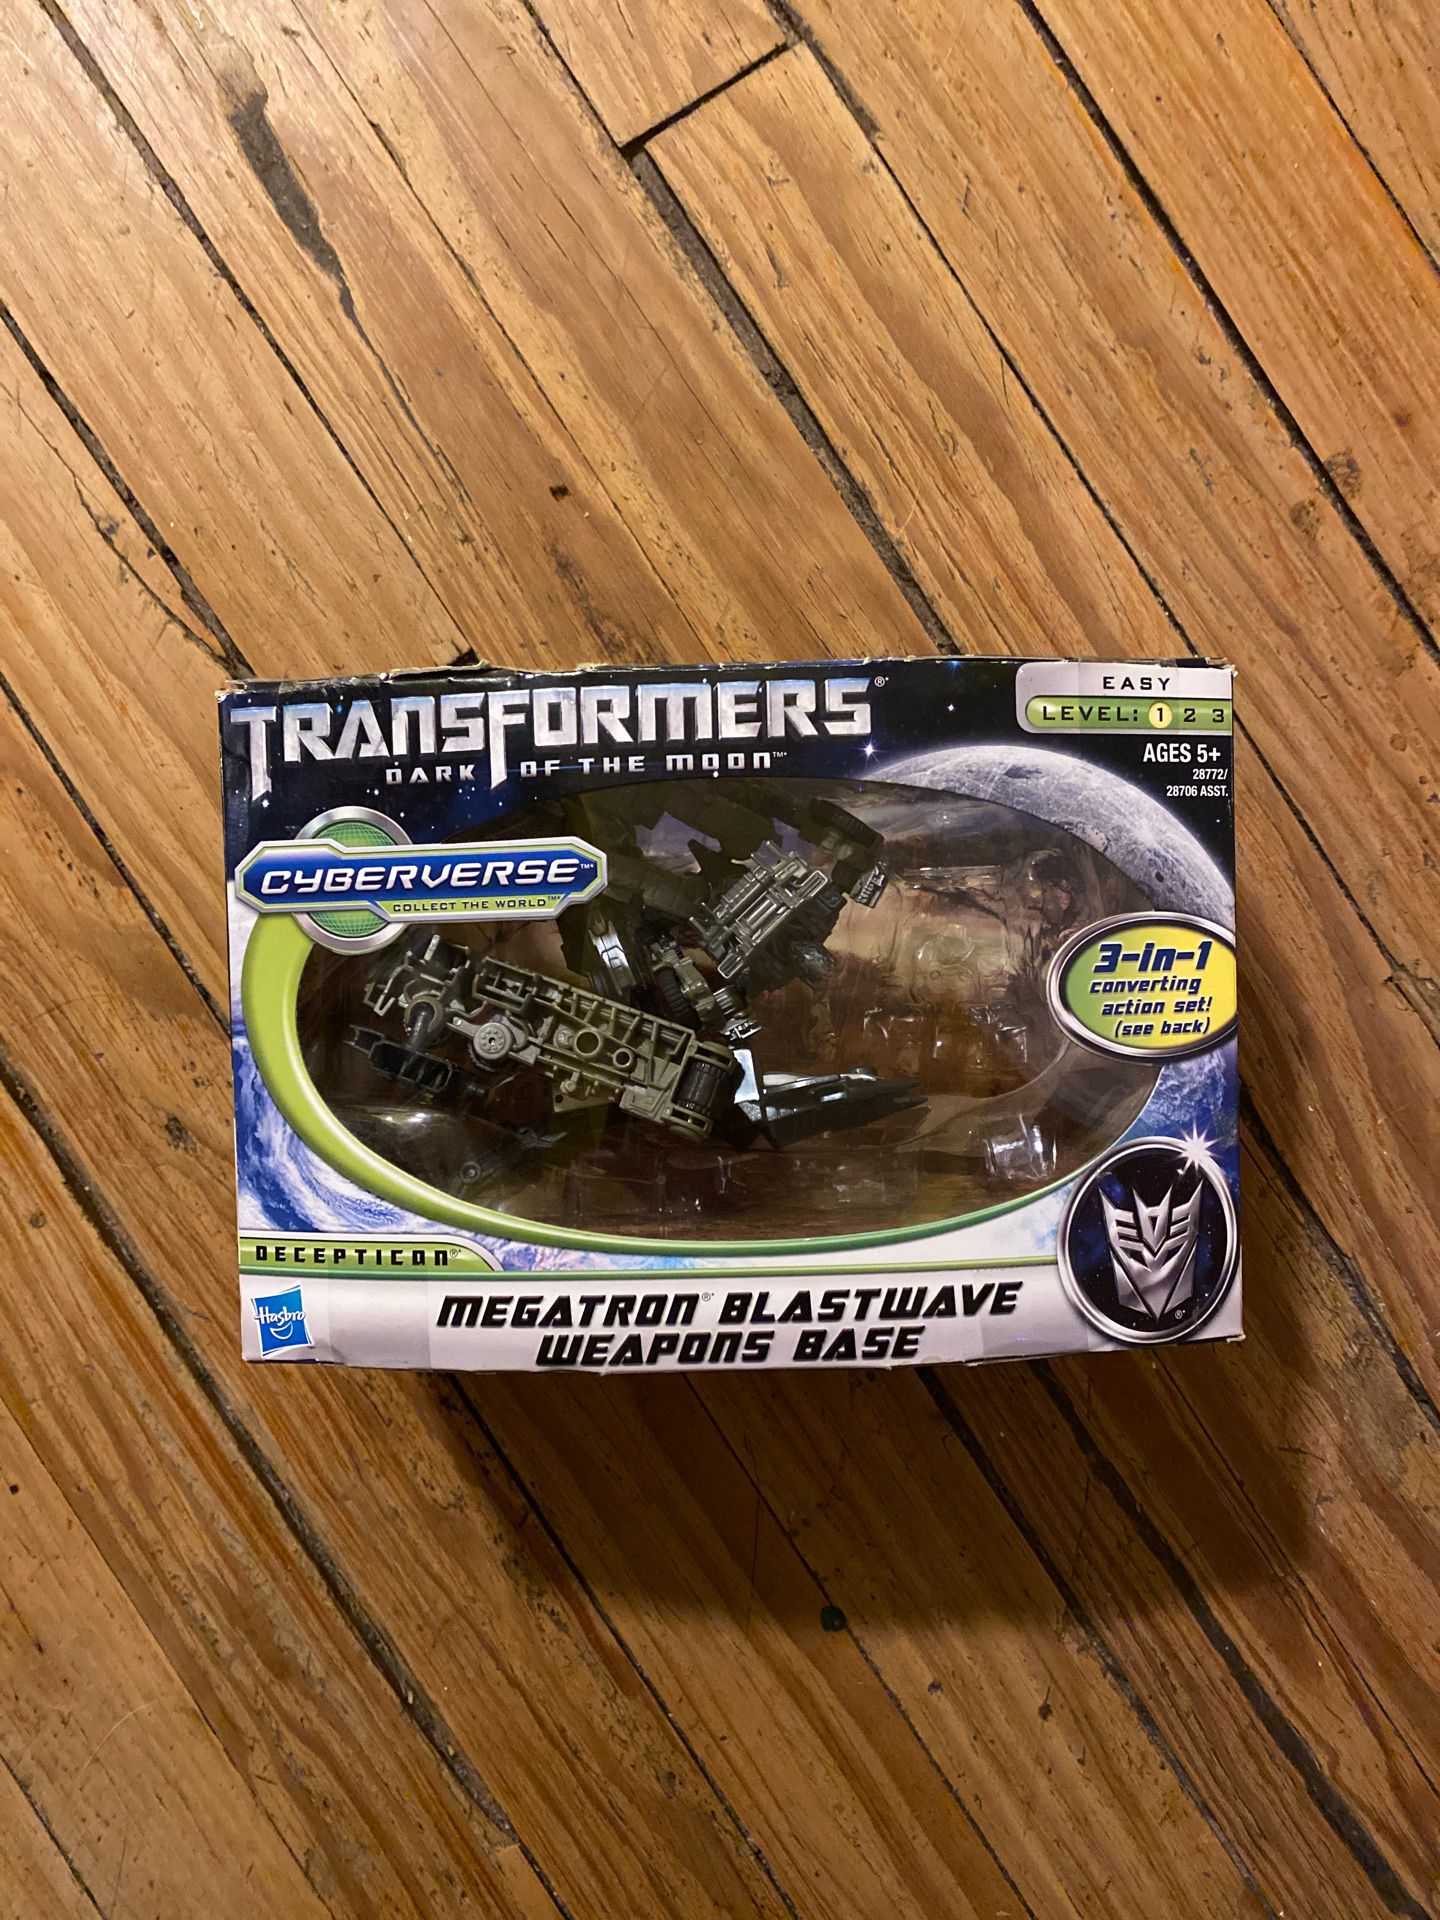 Transformers toy. Megatron blastwave weapons base.